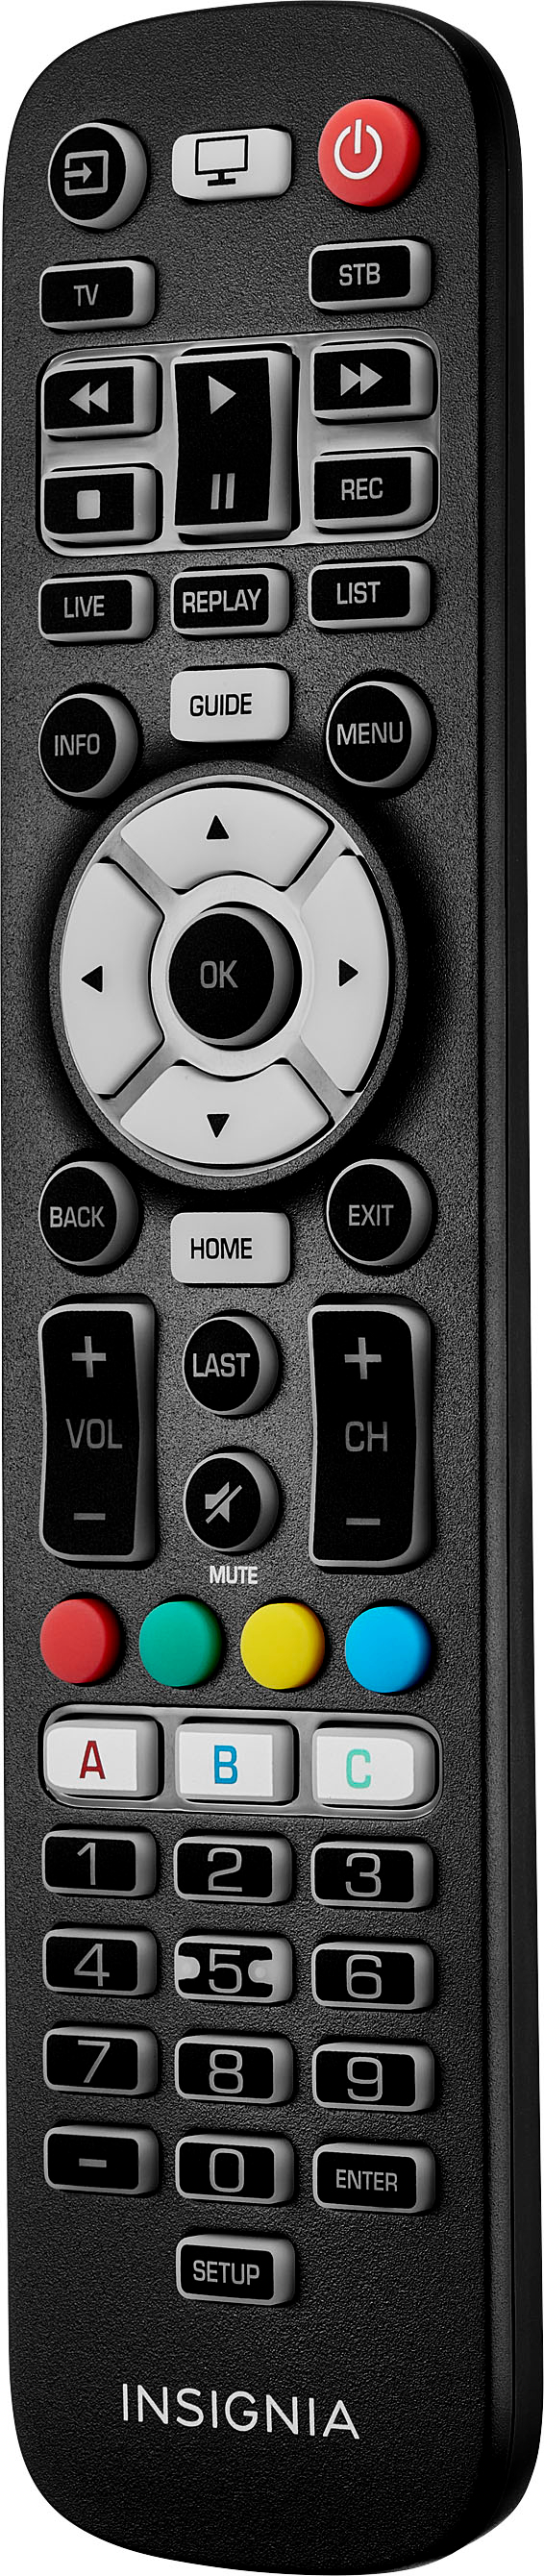 Left View: Universal Remote Control - 200-Device Universal Remote - Black